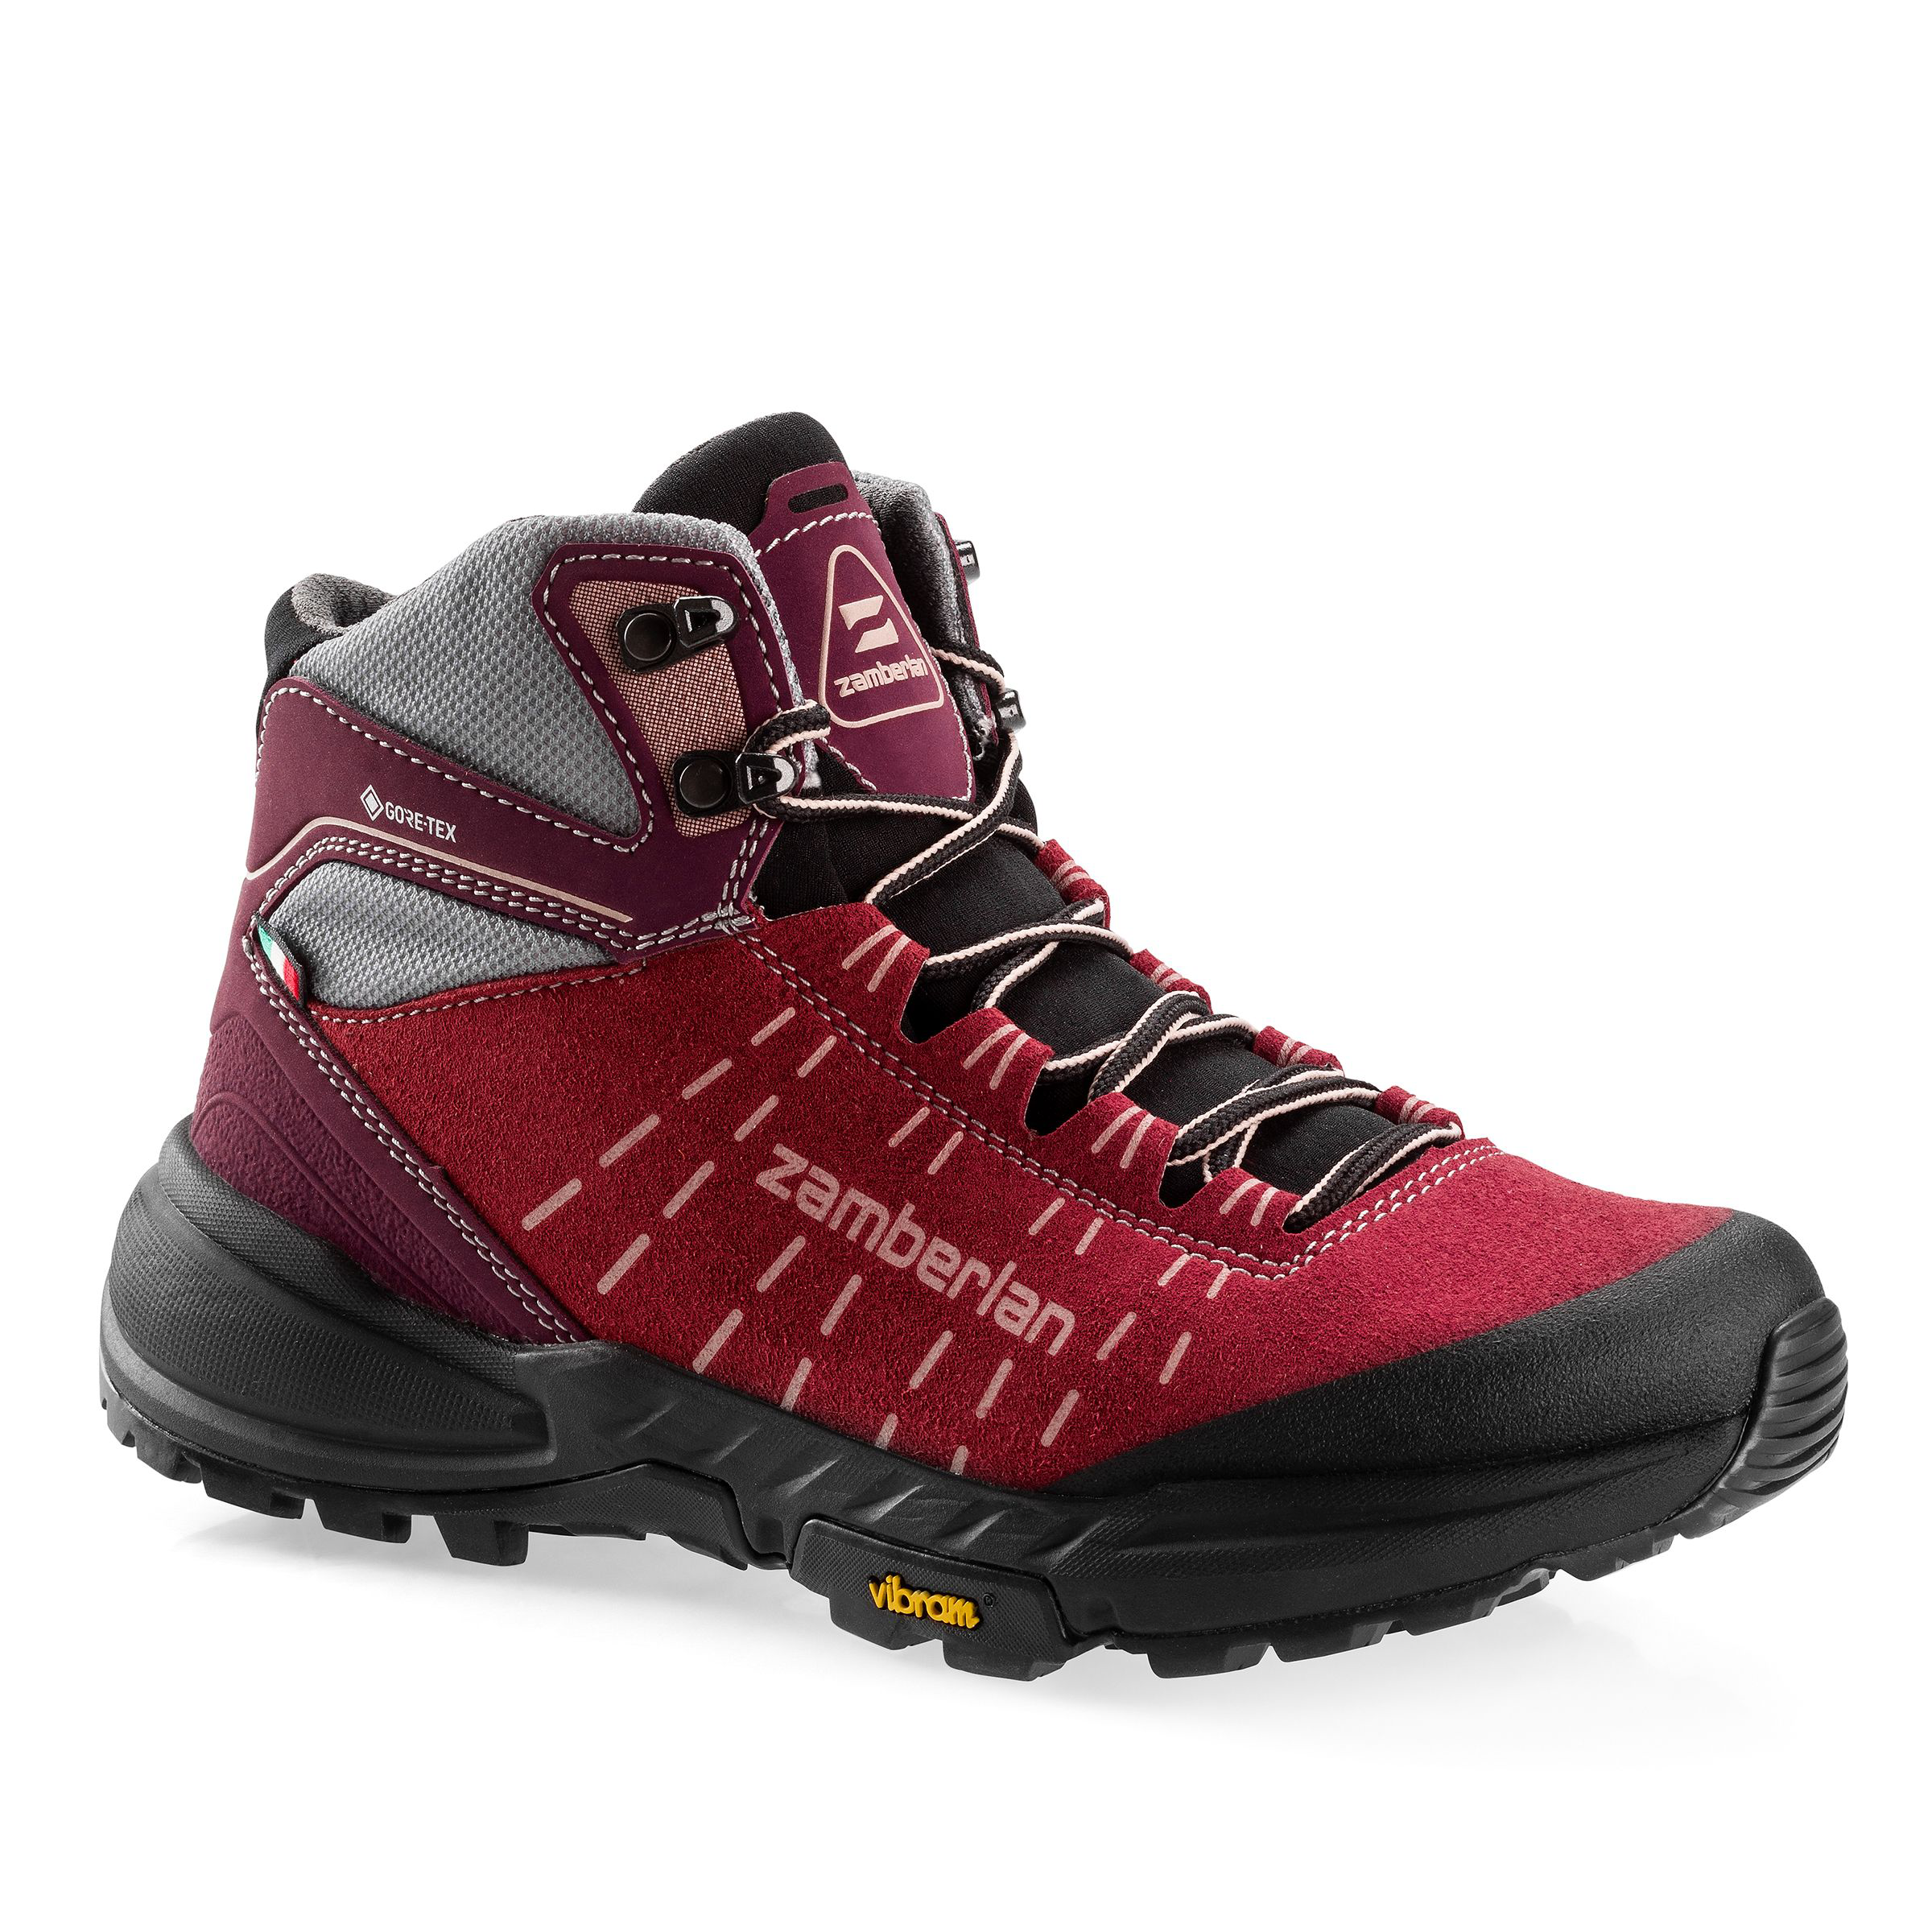 Zamberlan 334 Circe GTX Waterproof Hiking Boots for Ladies - Purple - 9M